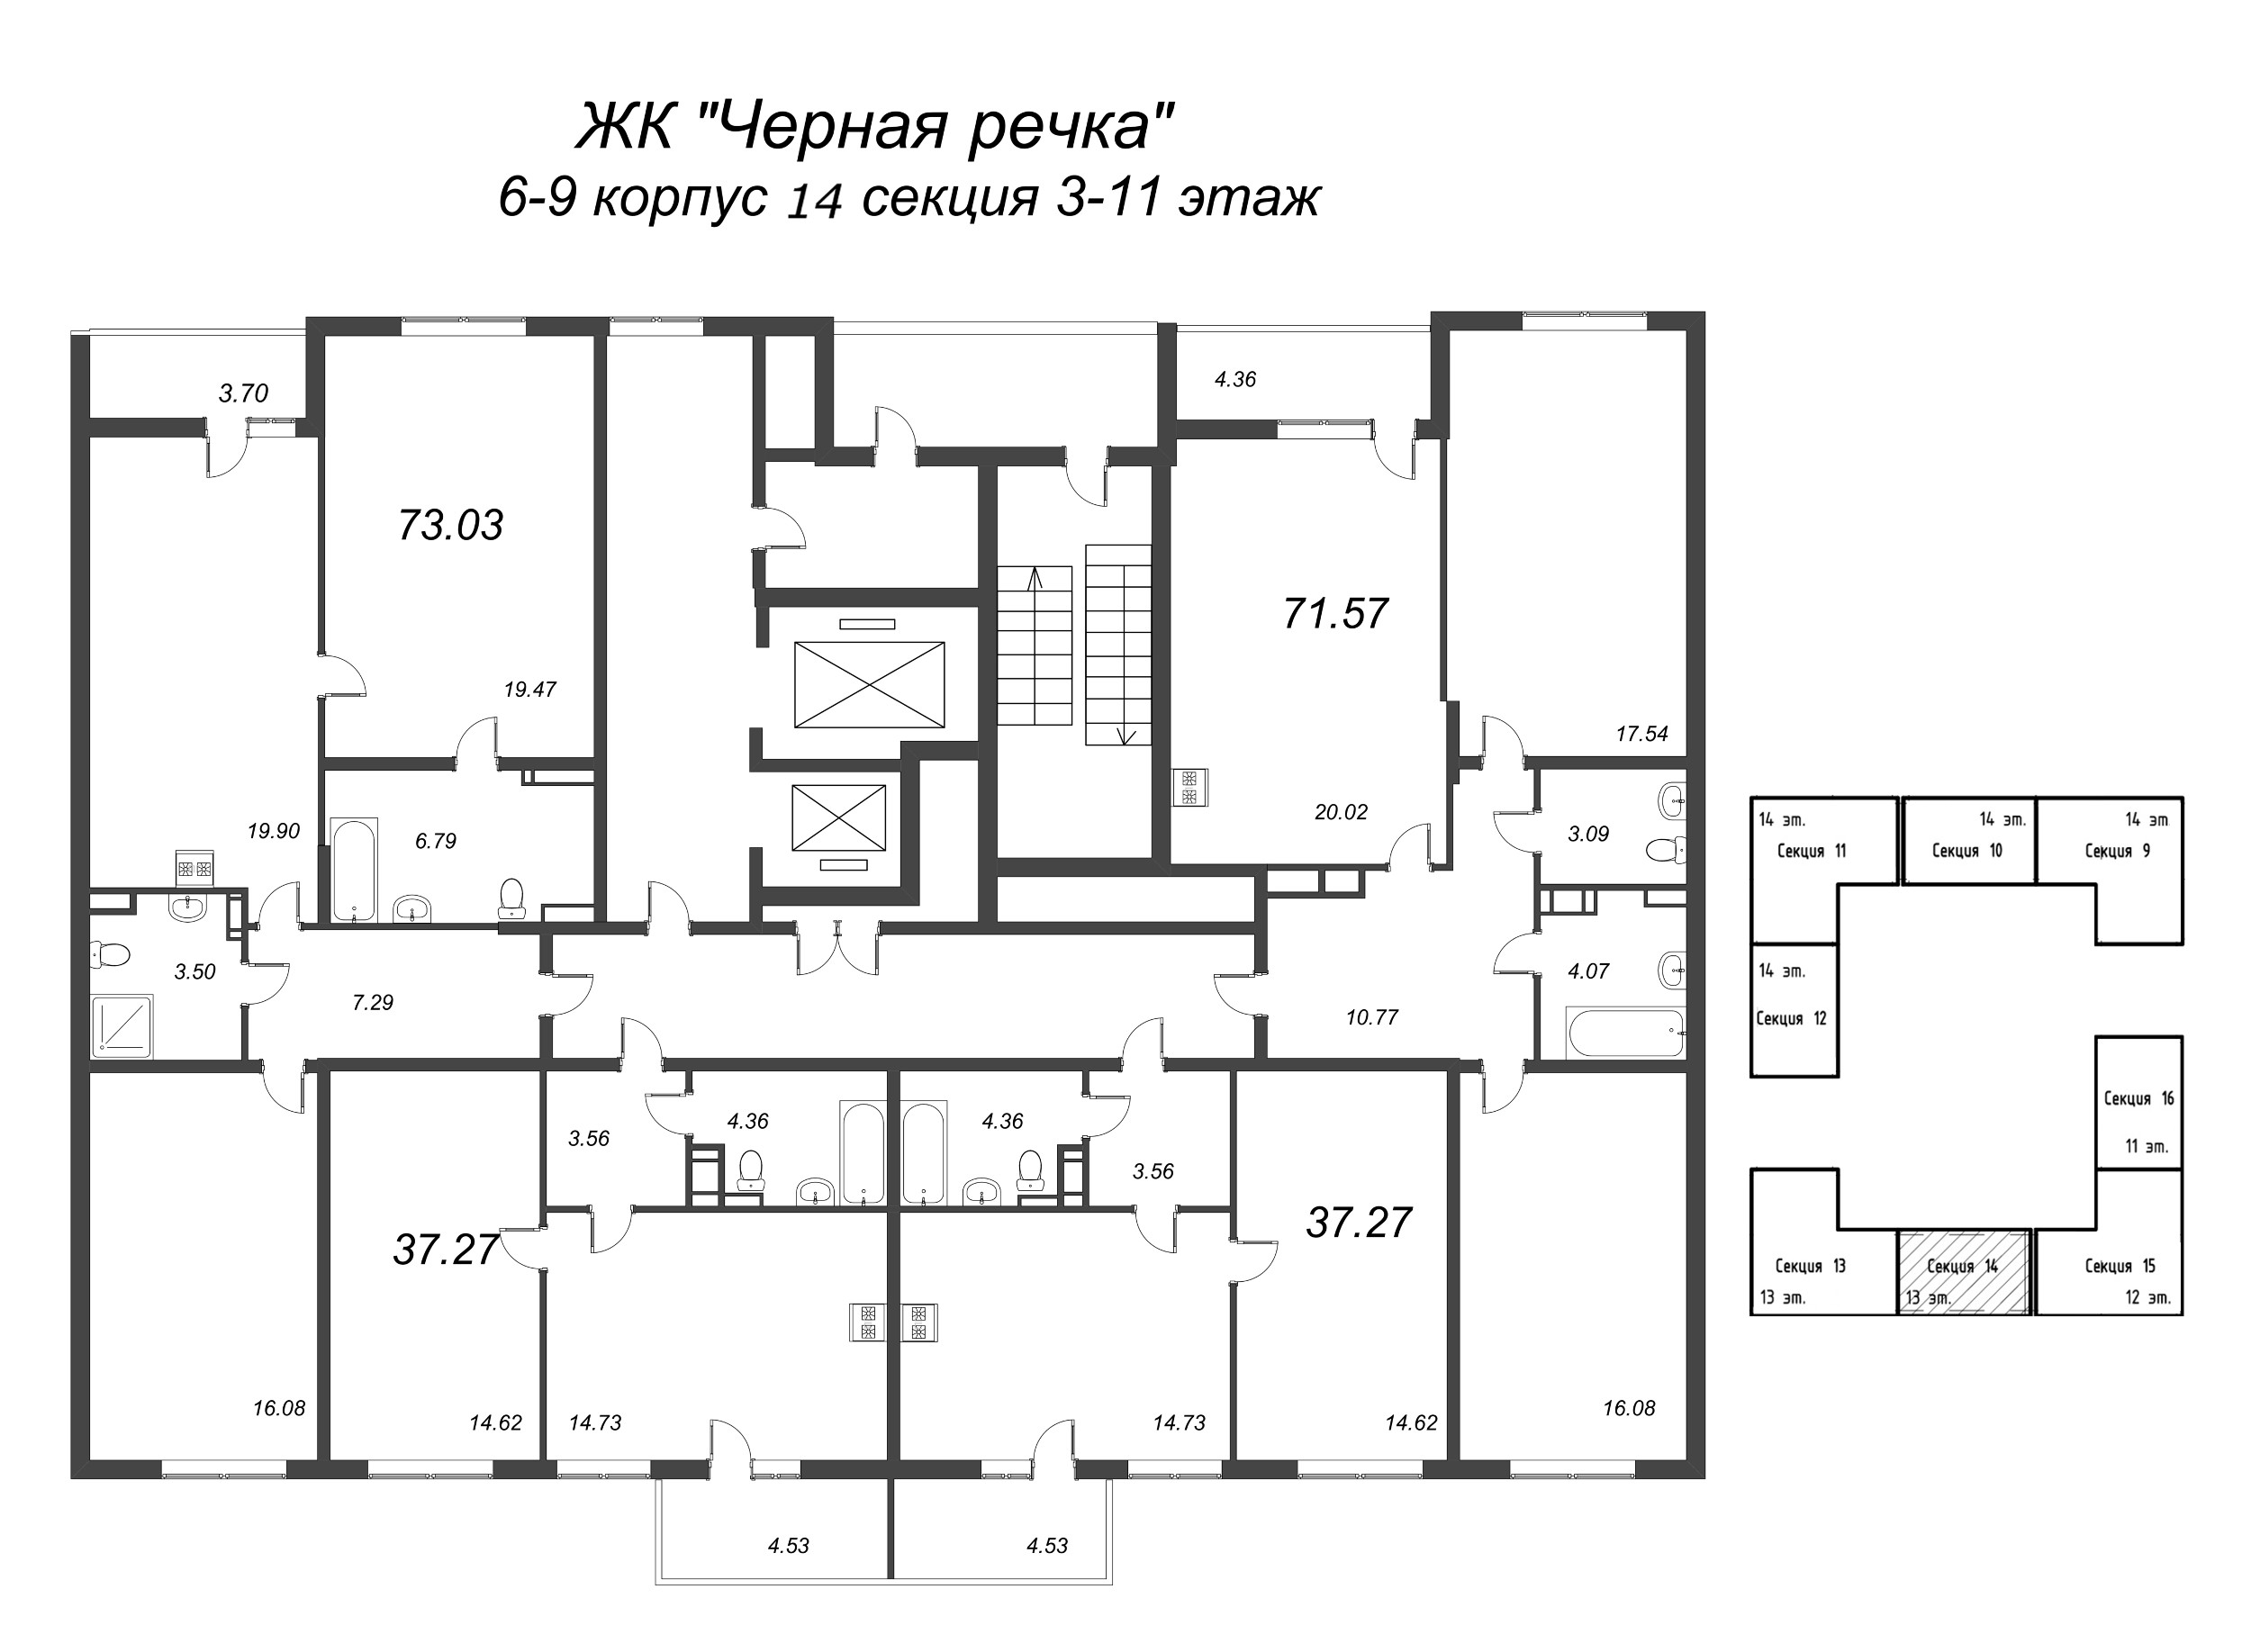 3-комнатная (Евро) квартира, 73.03 м² - планировка этажа